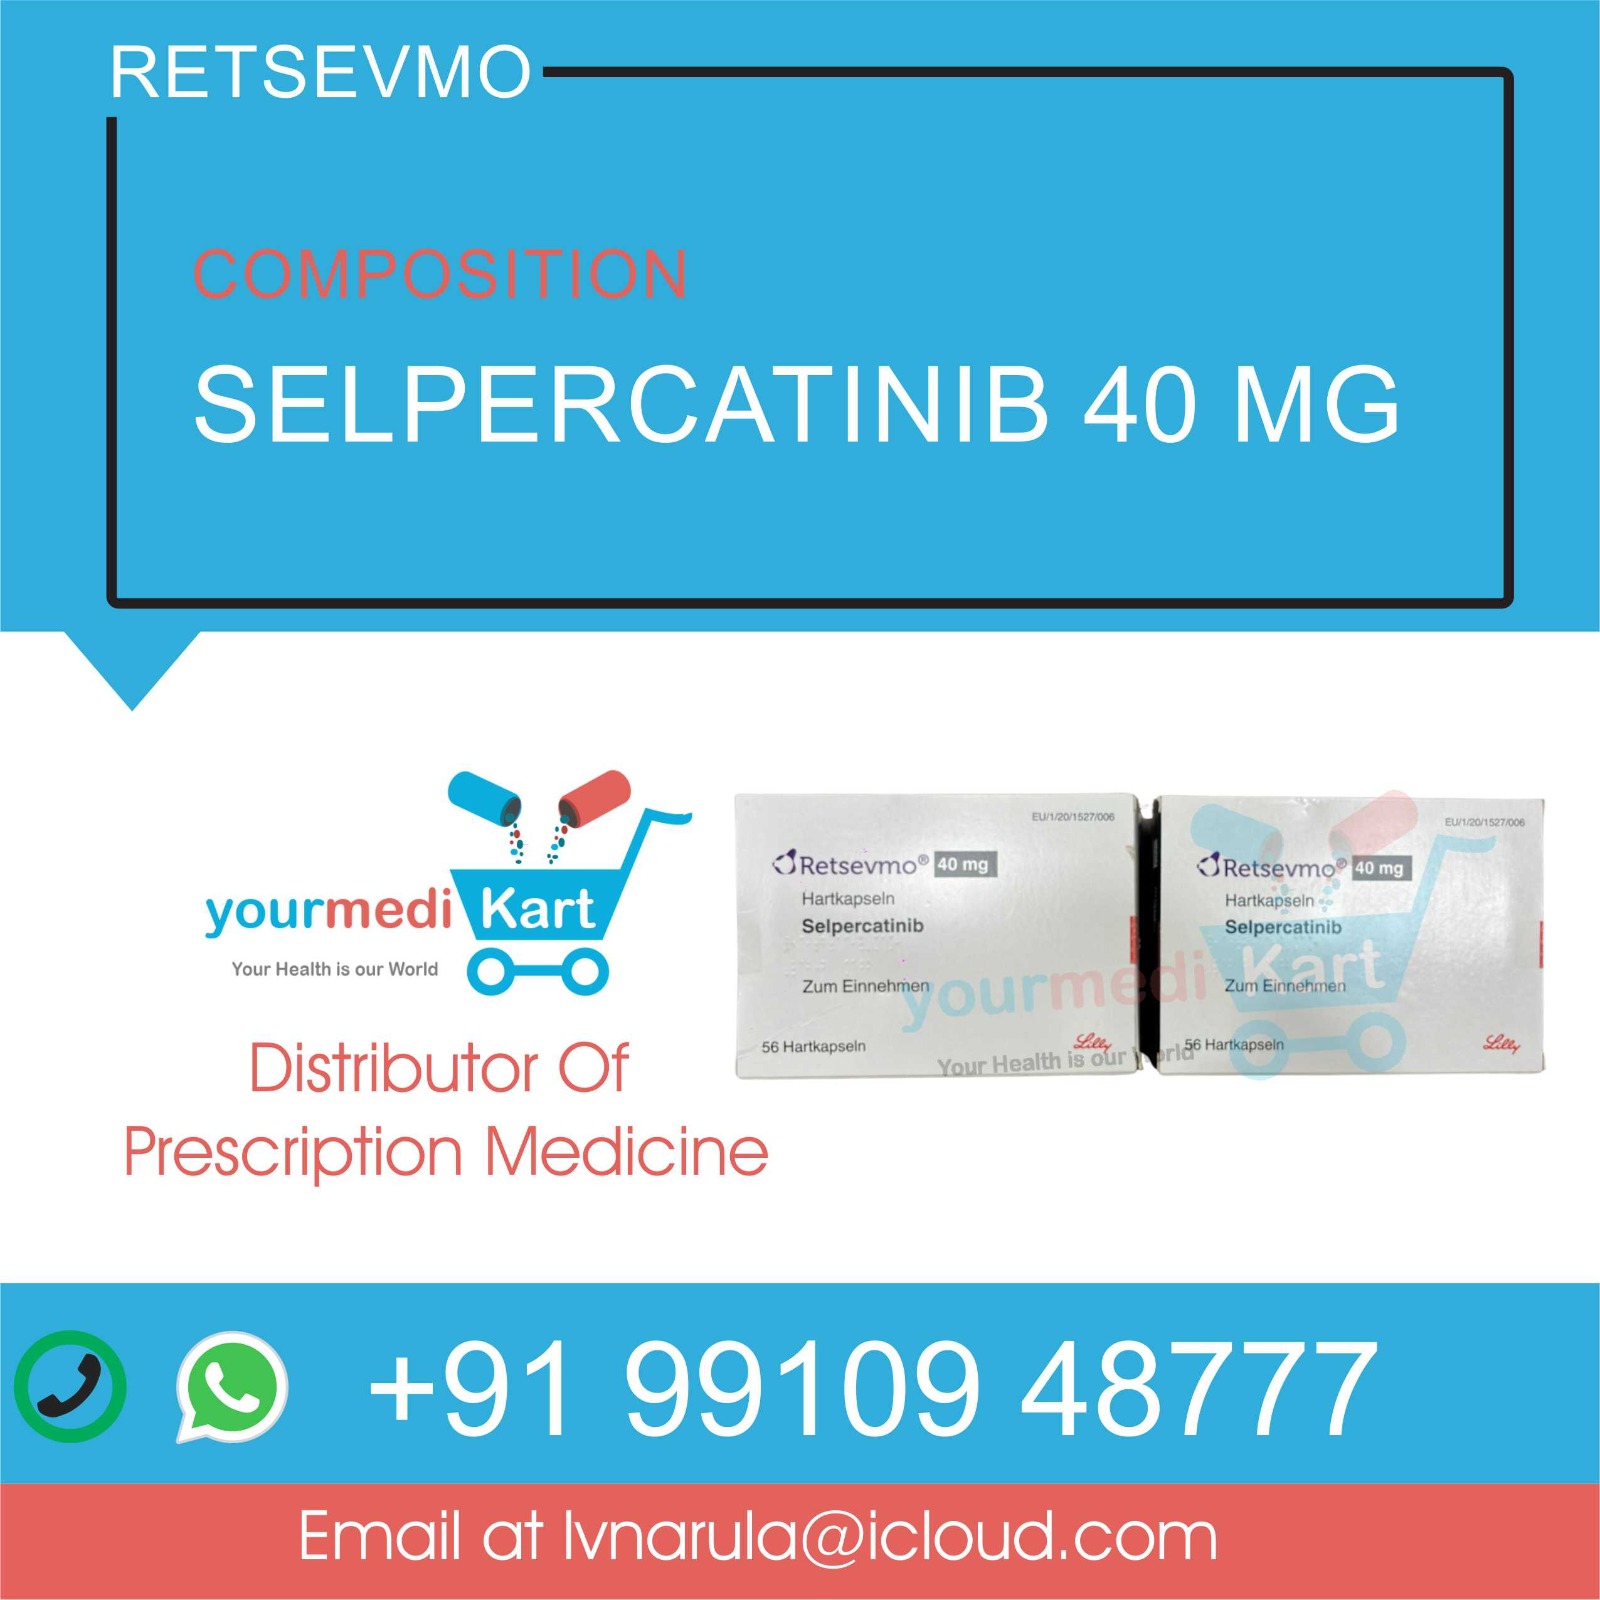 Retsevmo Selpercatinib